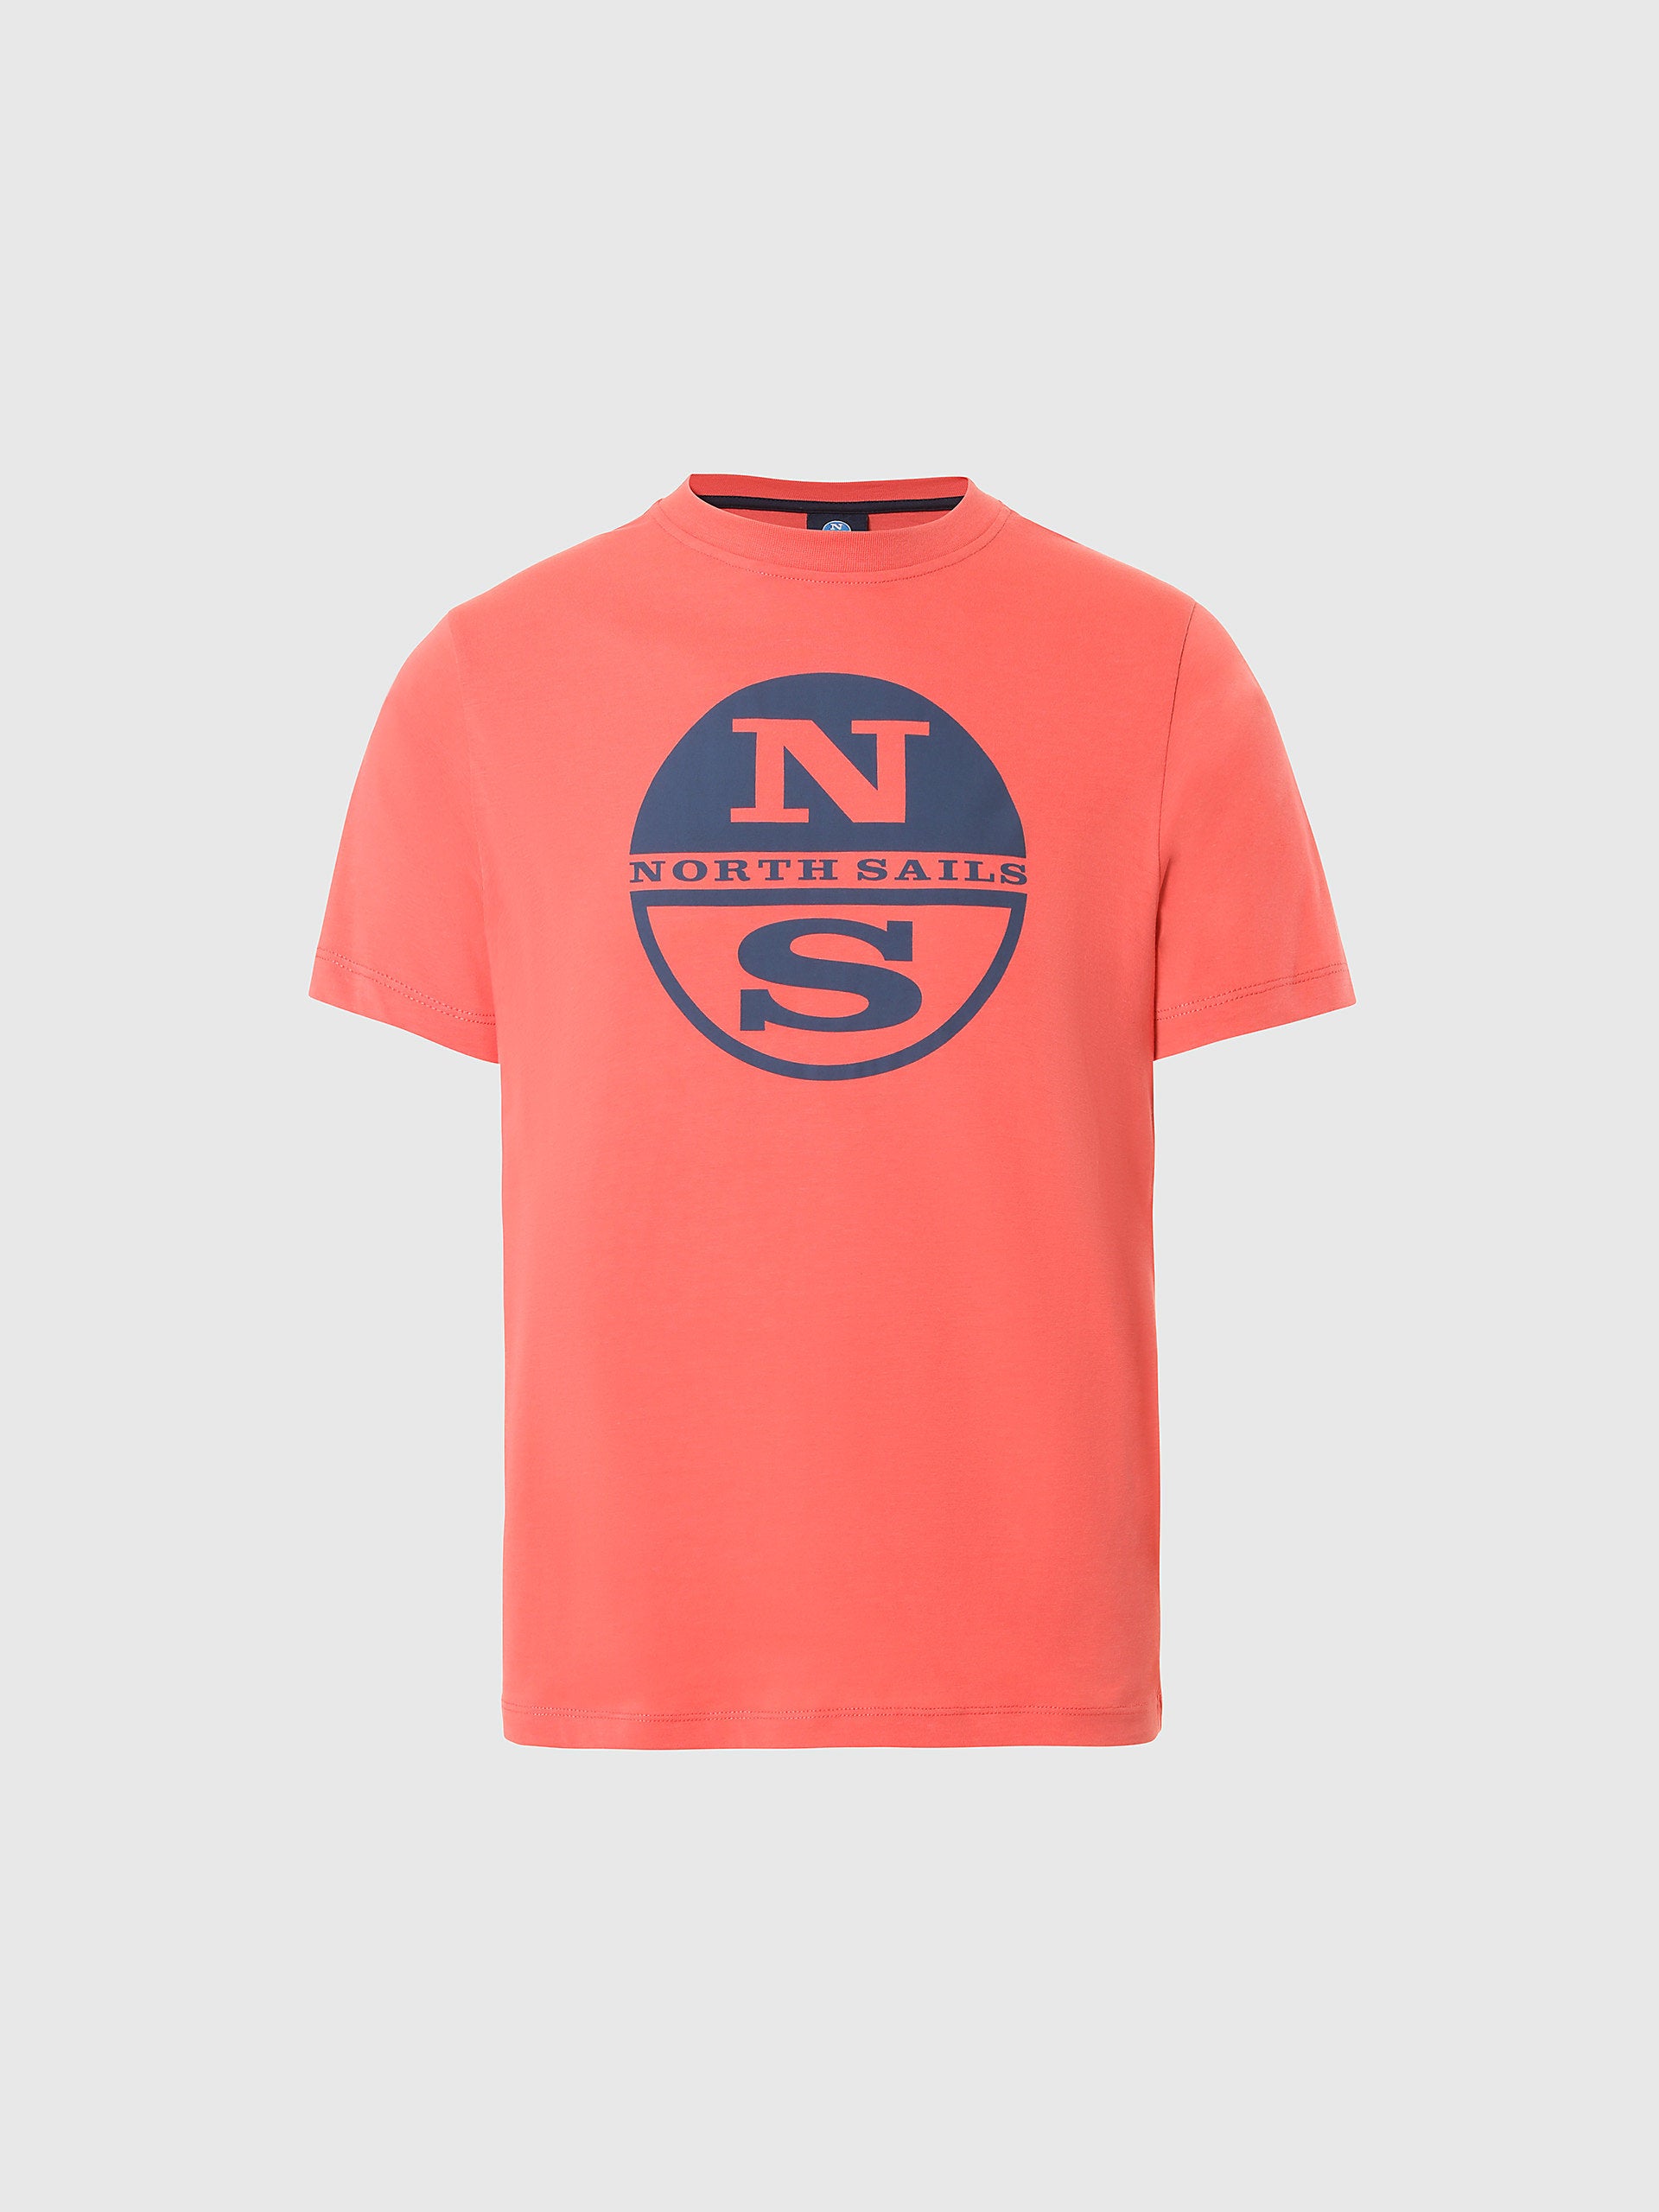 North Sails - T-shirt con stampa maxi logoNorth SailsSpiced coralS